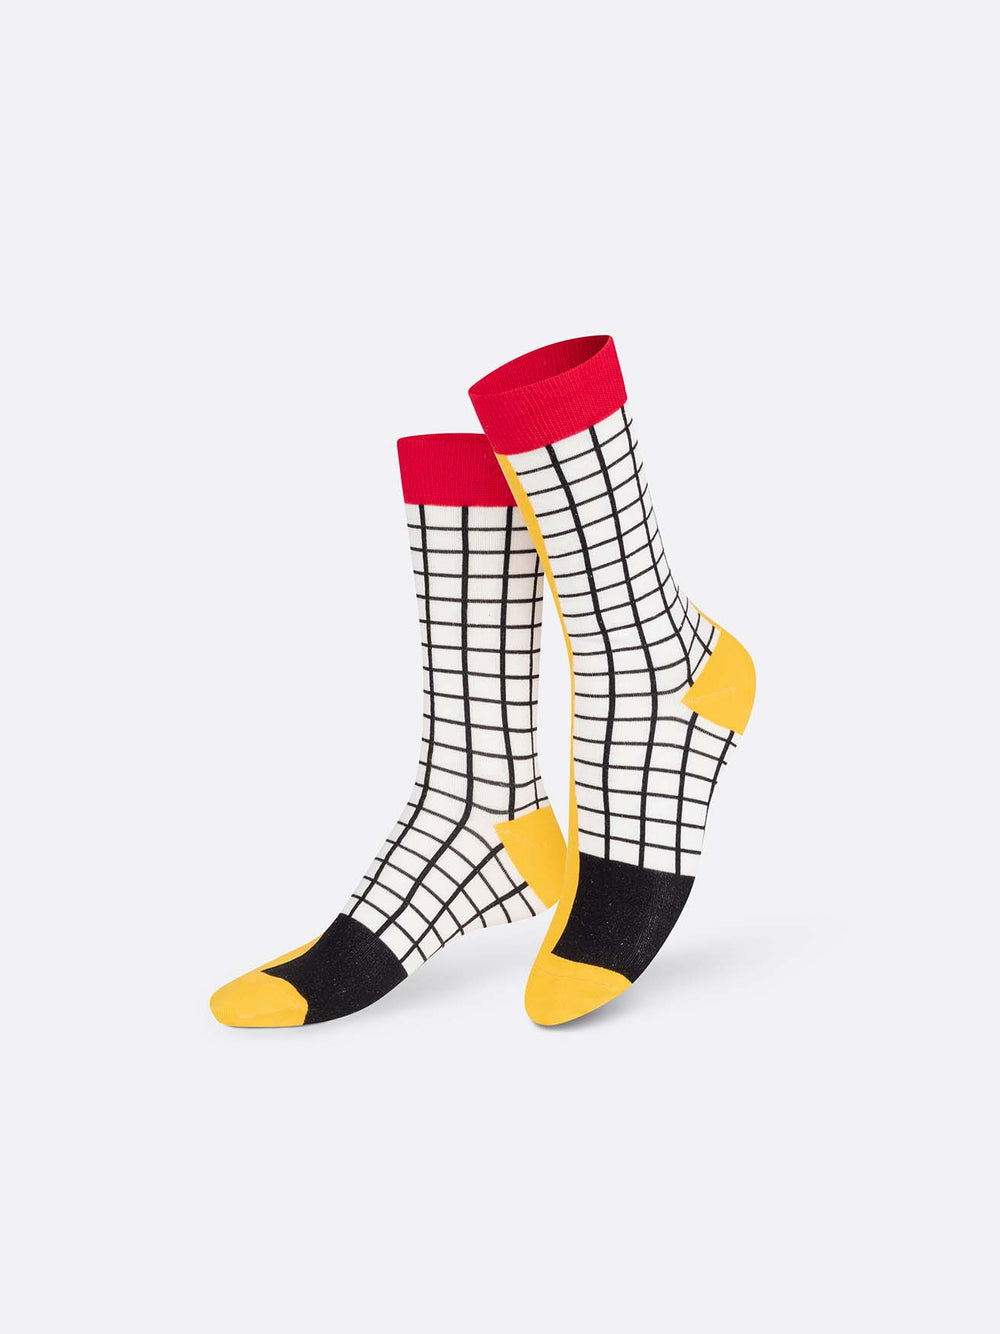 French Fries Socks - #Perch#